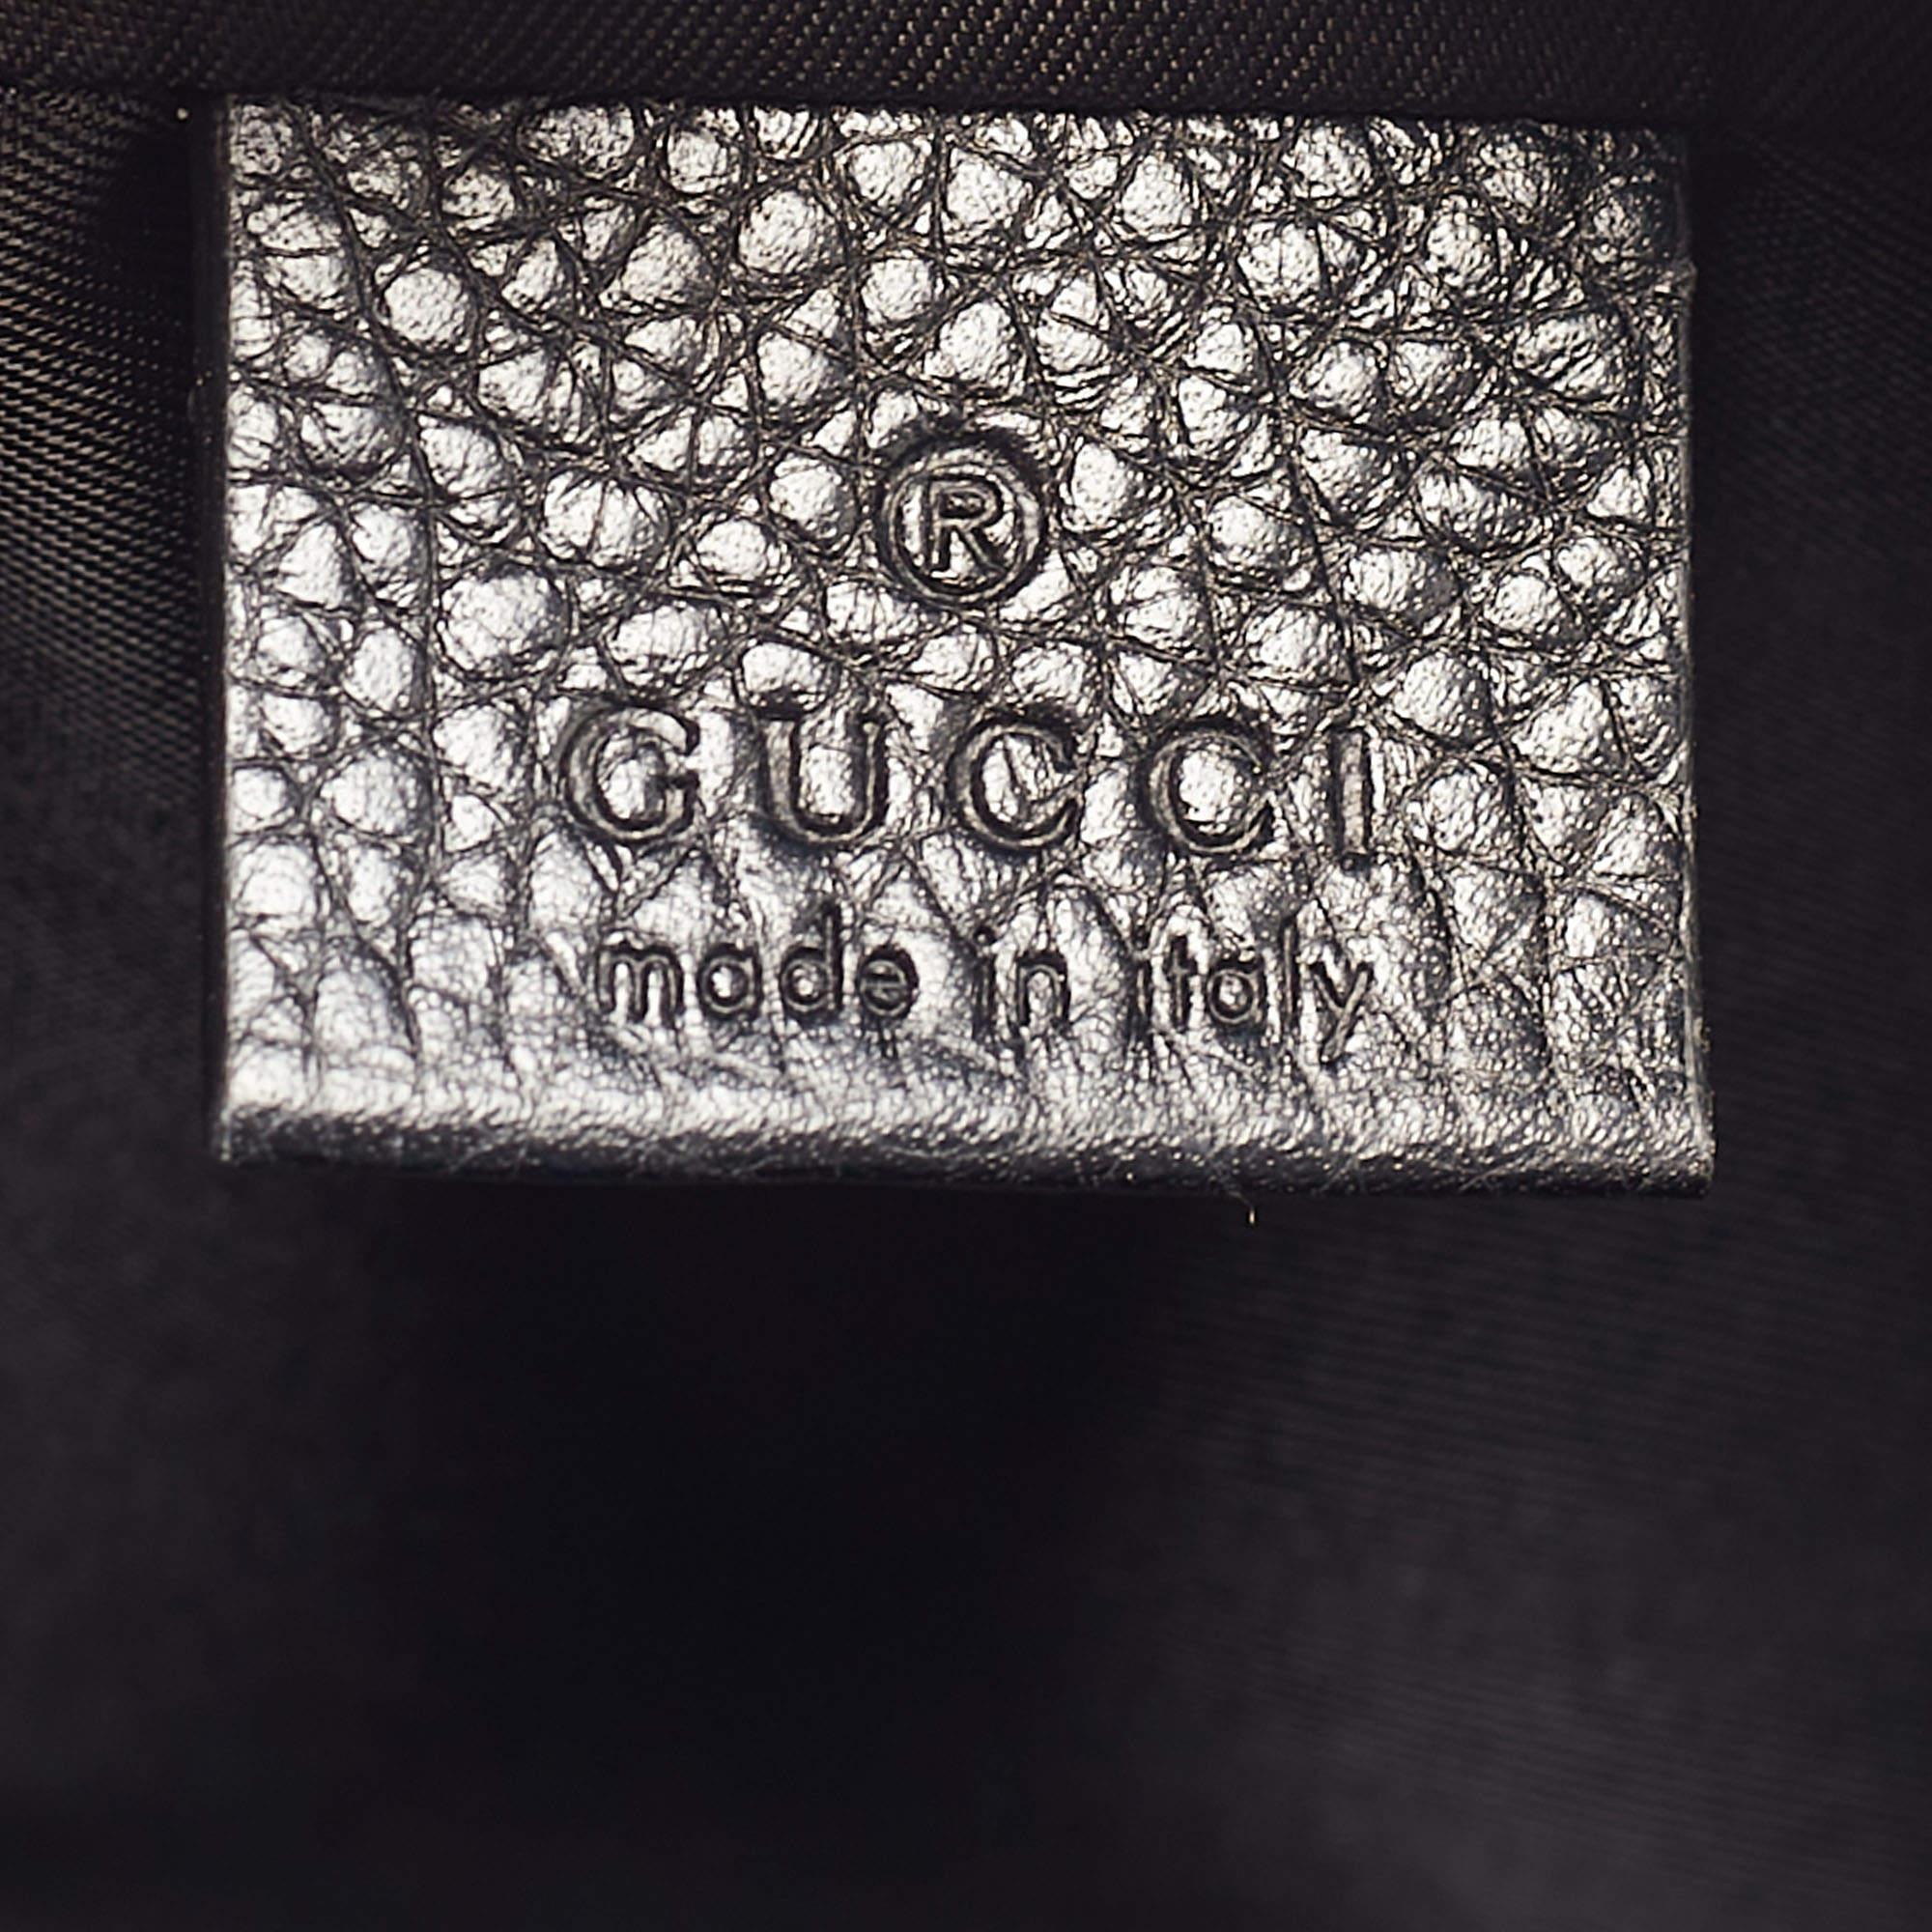 Gucci Black Leather Mini Soho Disco Shoulder Bag 6